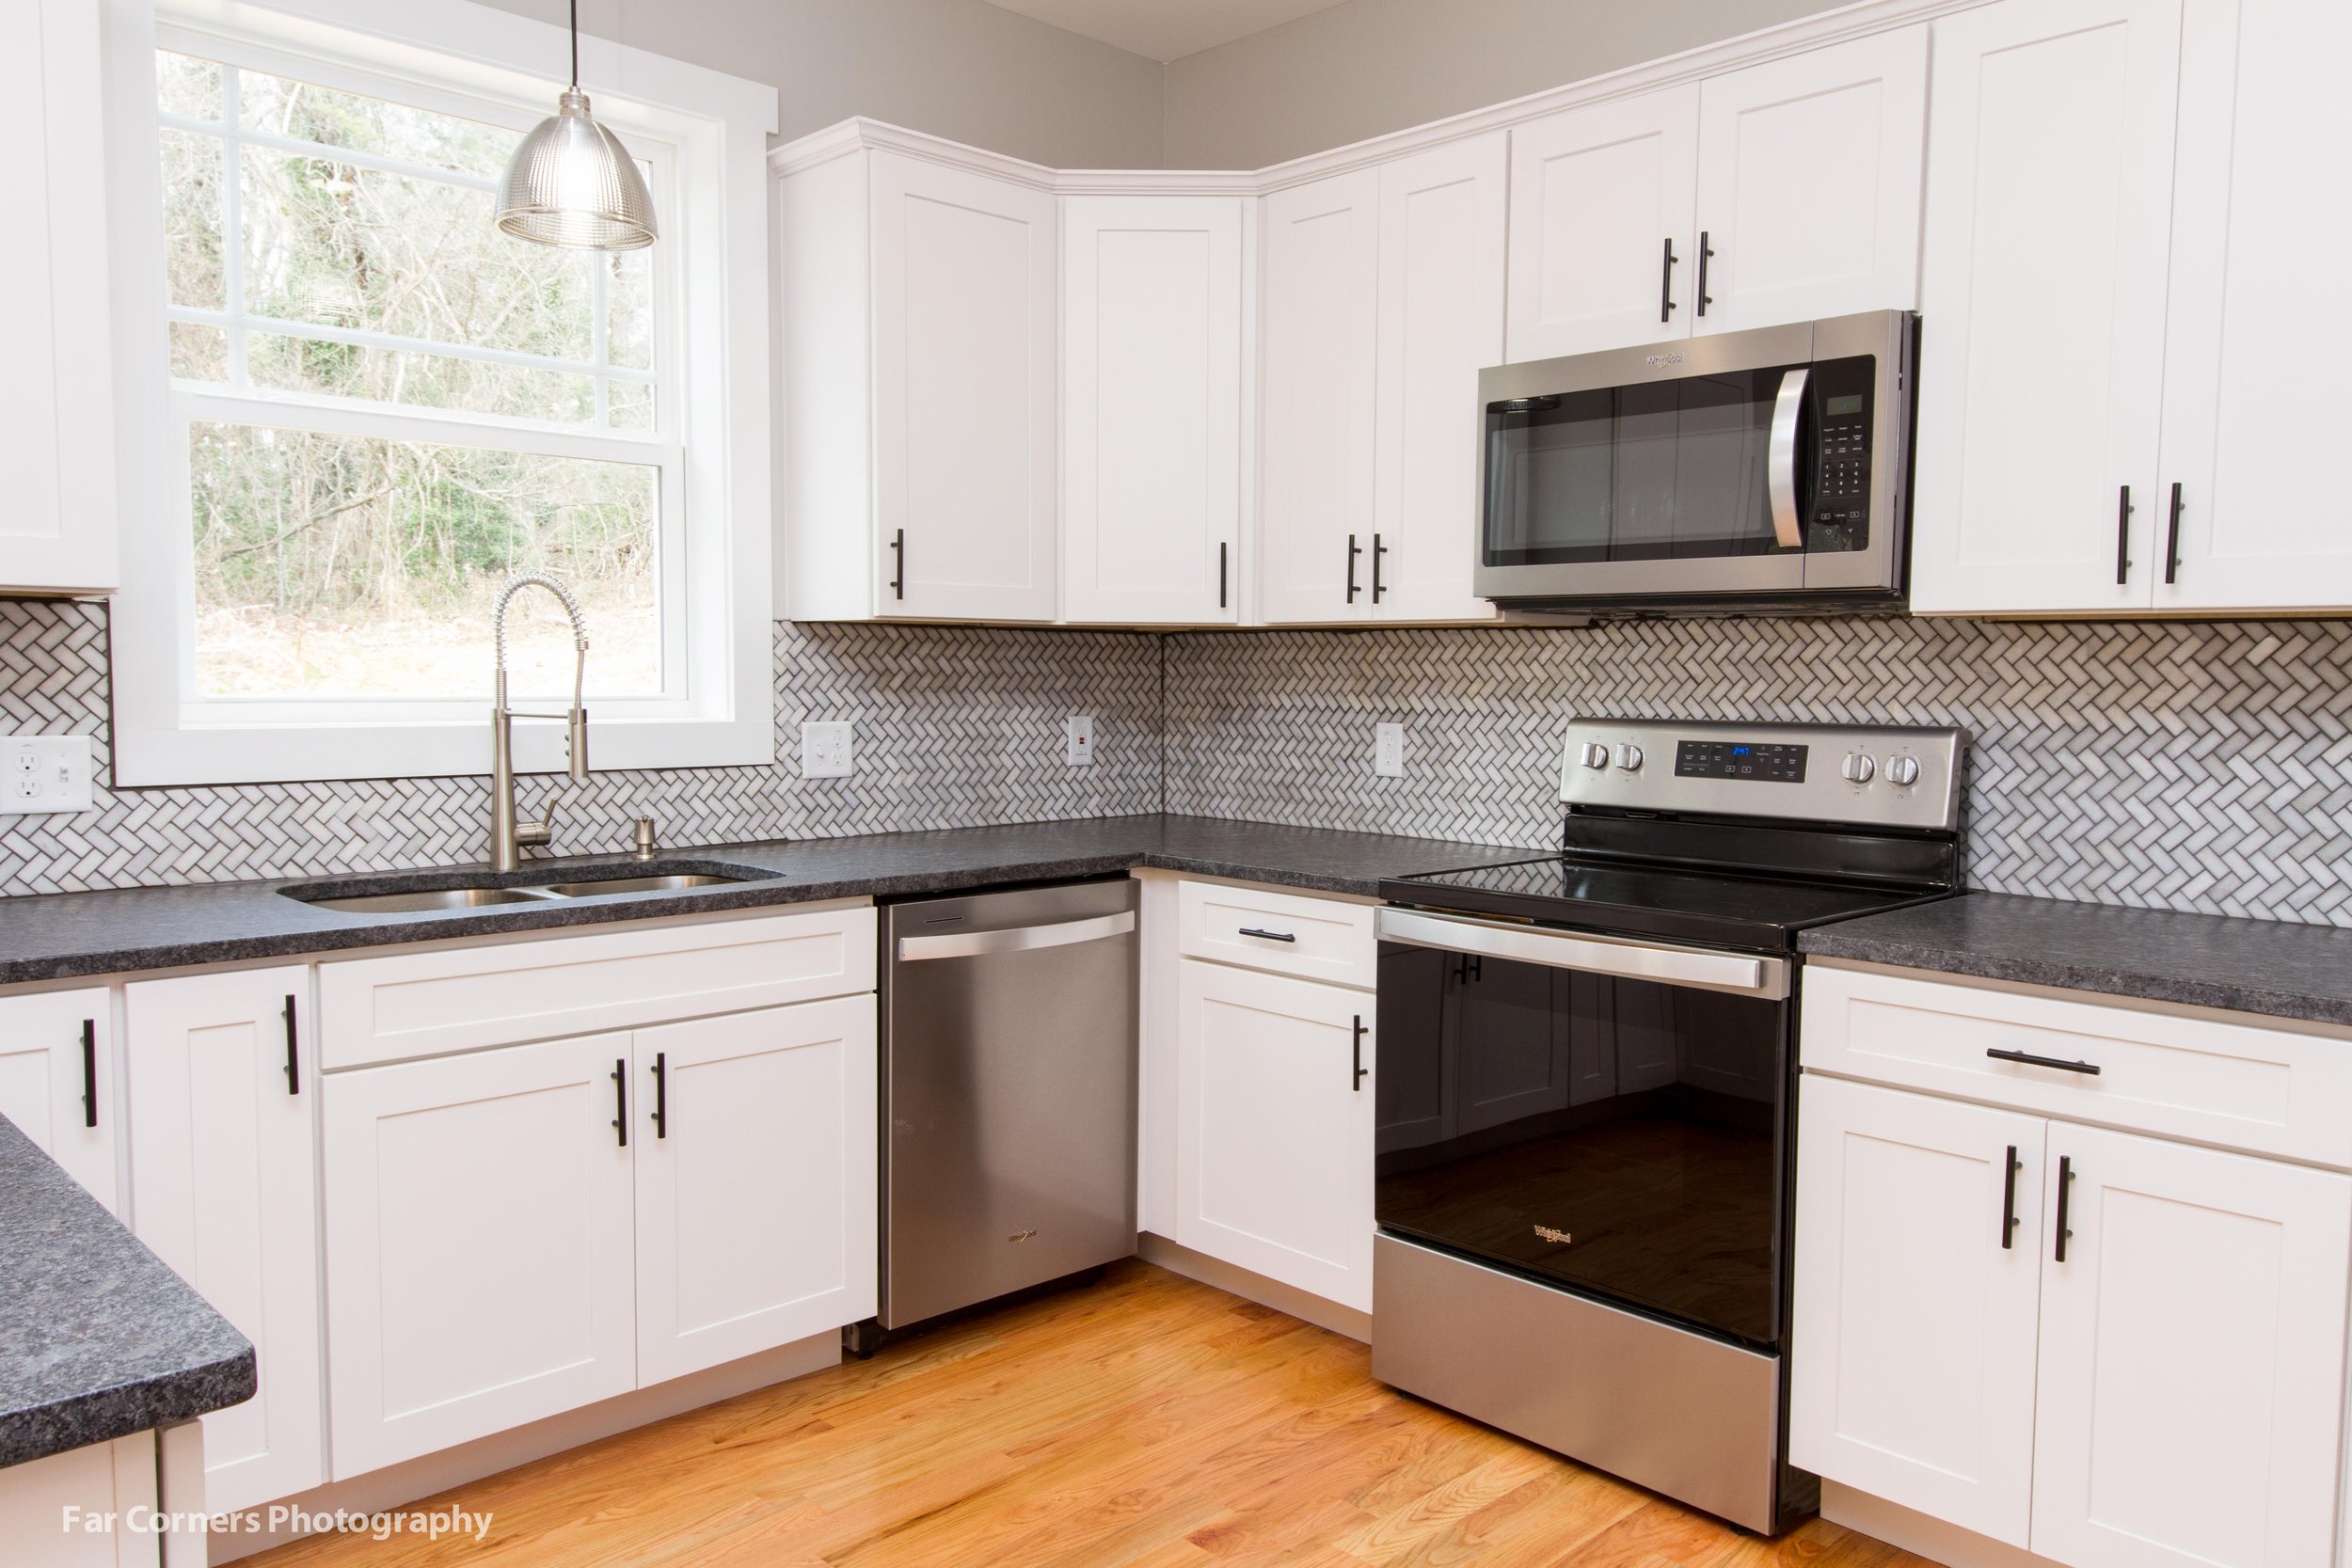 Best Kitchen & Bathroom Remodeling Services In Asheville – Altamont Construction LLC